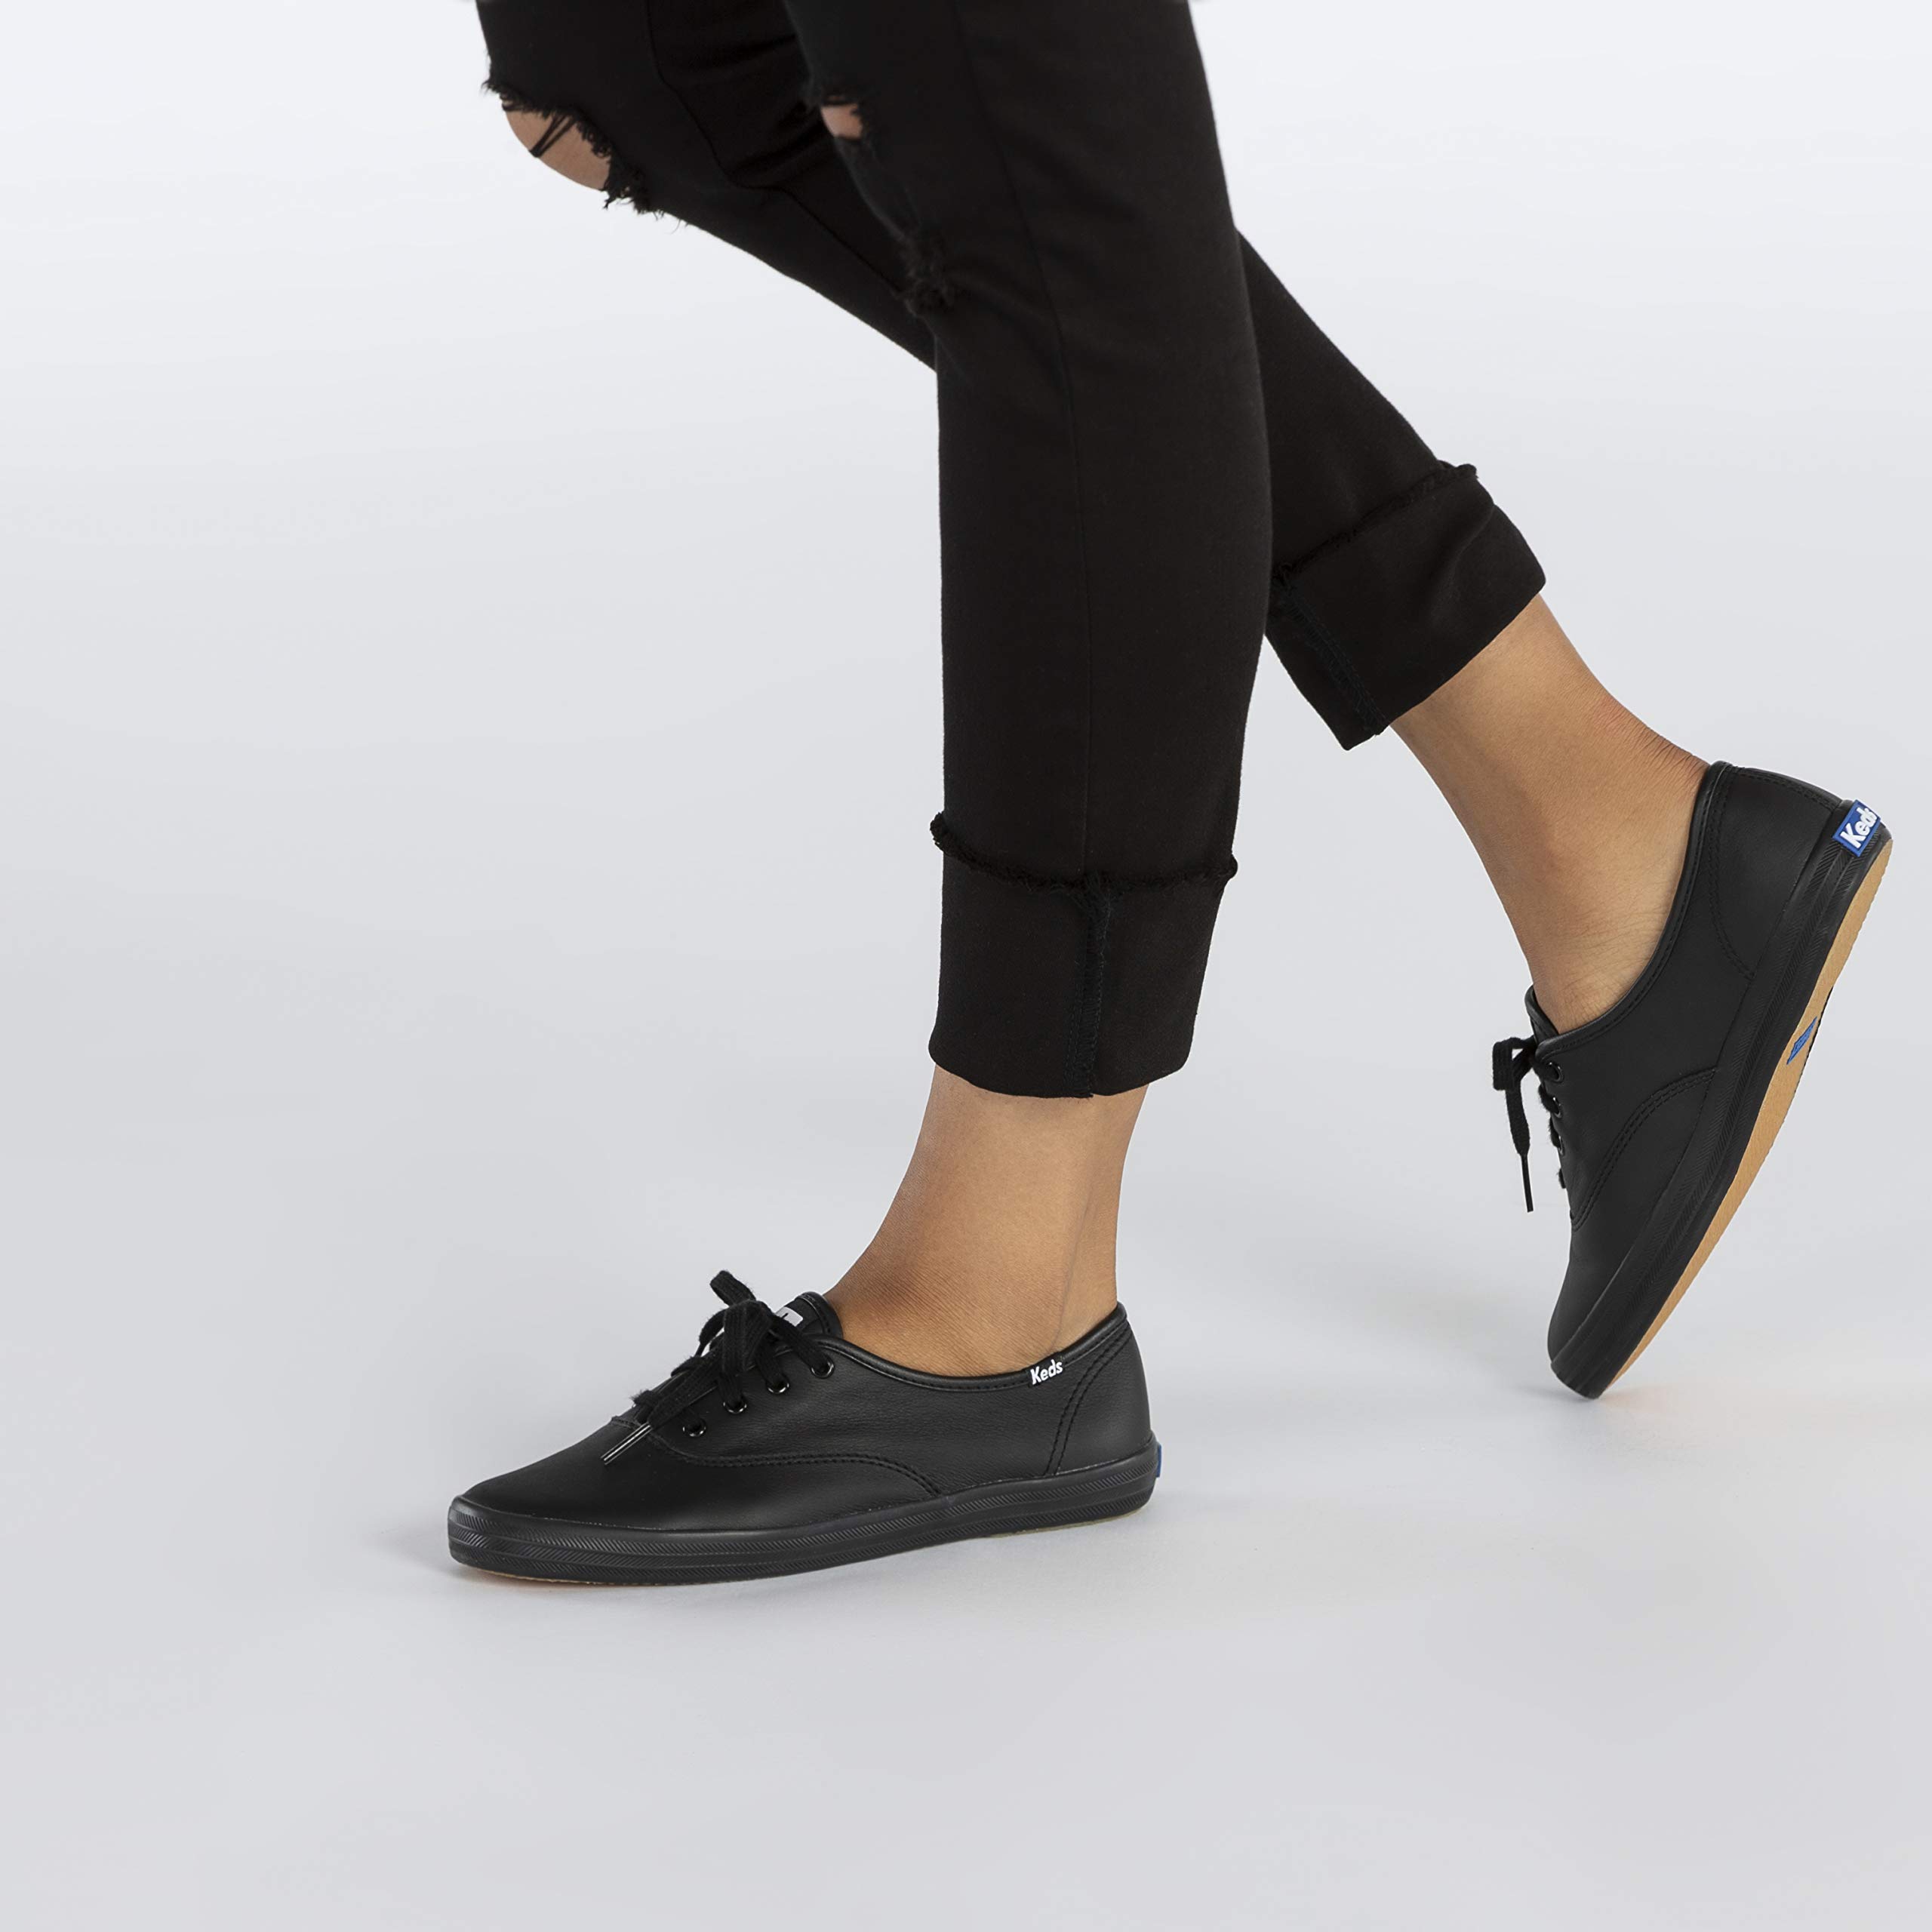 Keds Women's Champion Original Leather Lace-Up Sneaker, Black/Black, 13 Narrow US